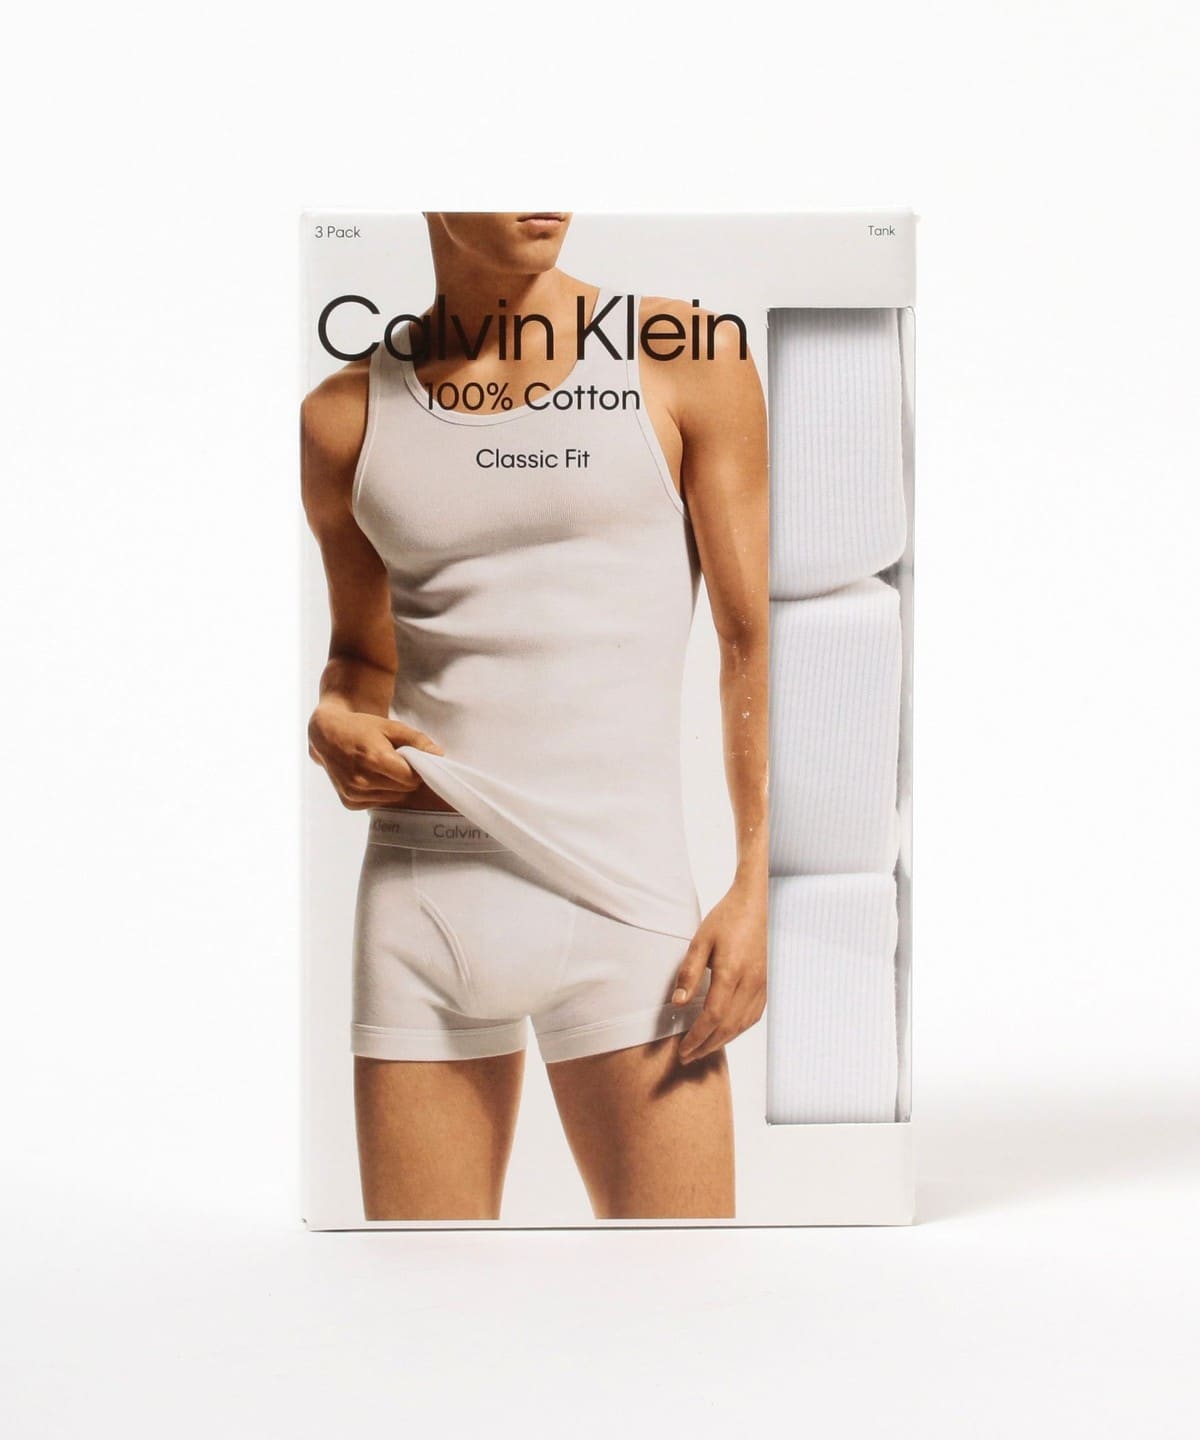 BEAMS（ビームス）Calvin Klein Underwear / 3Pack Tank（アンダー 